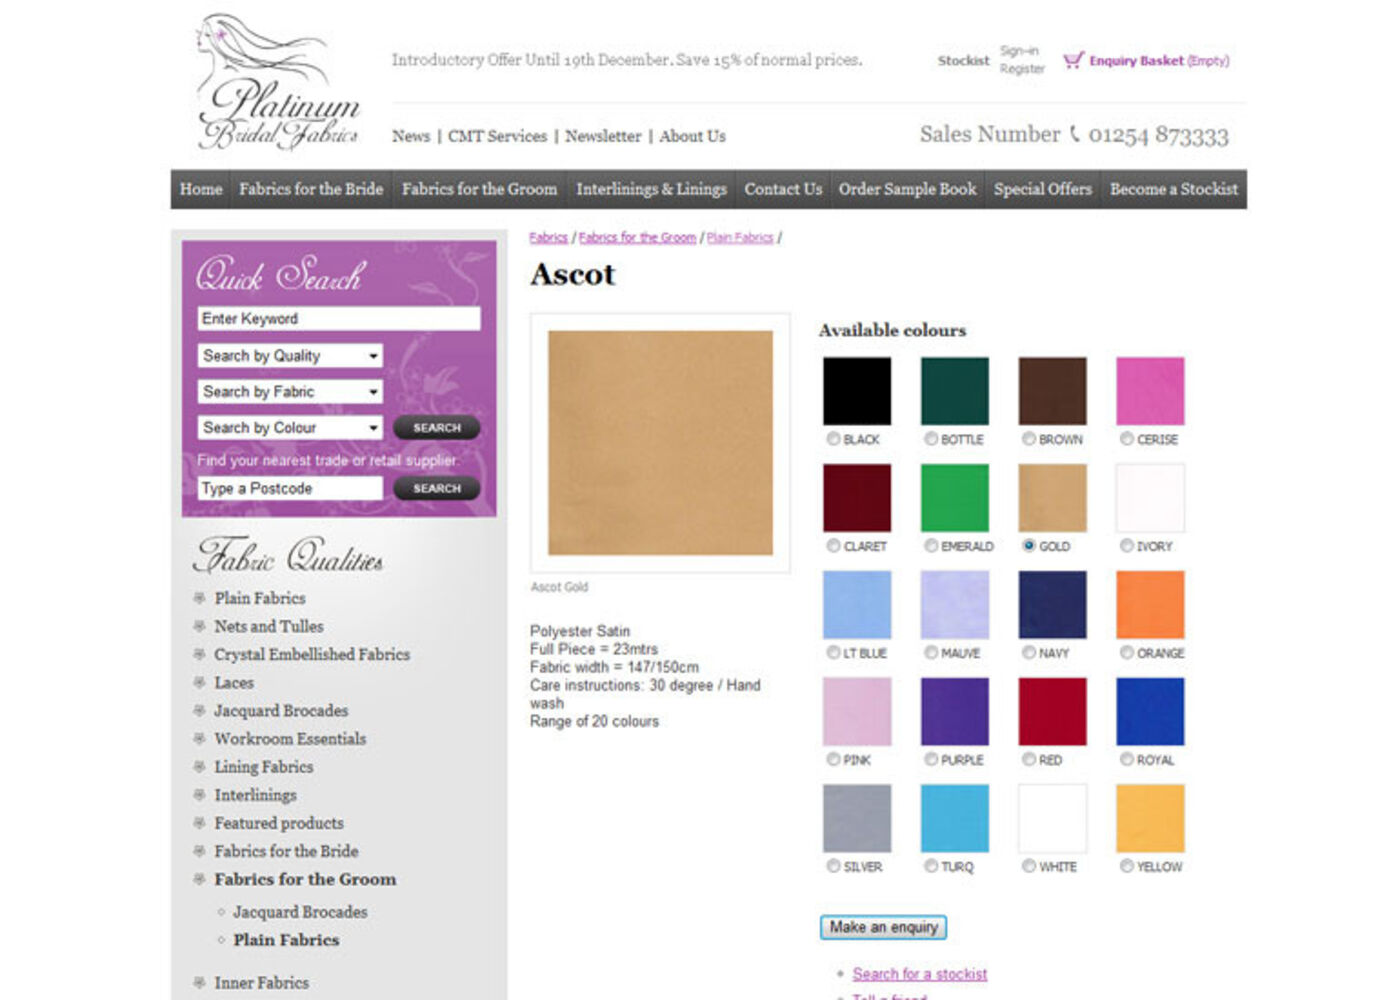 Bridal Fabrics (2009) Products